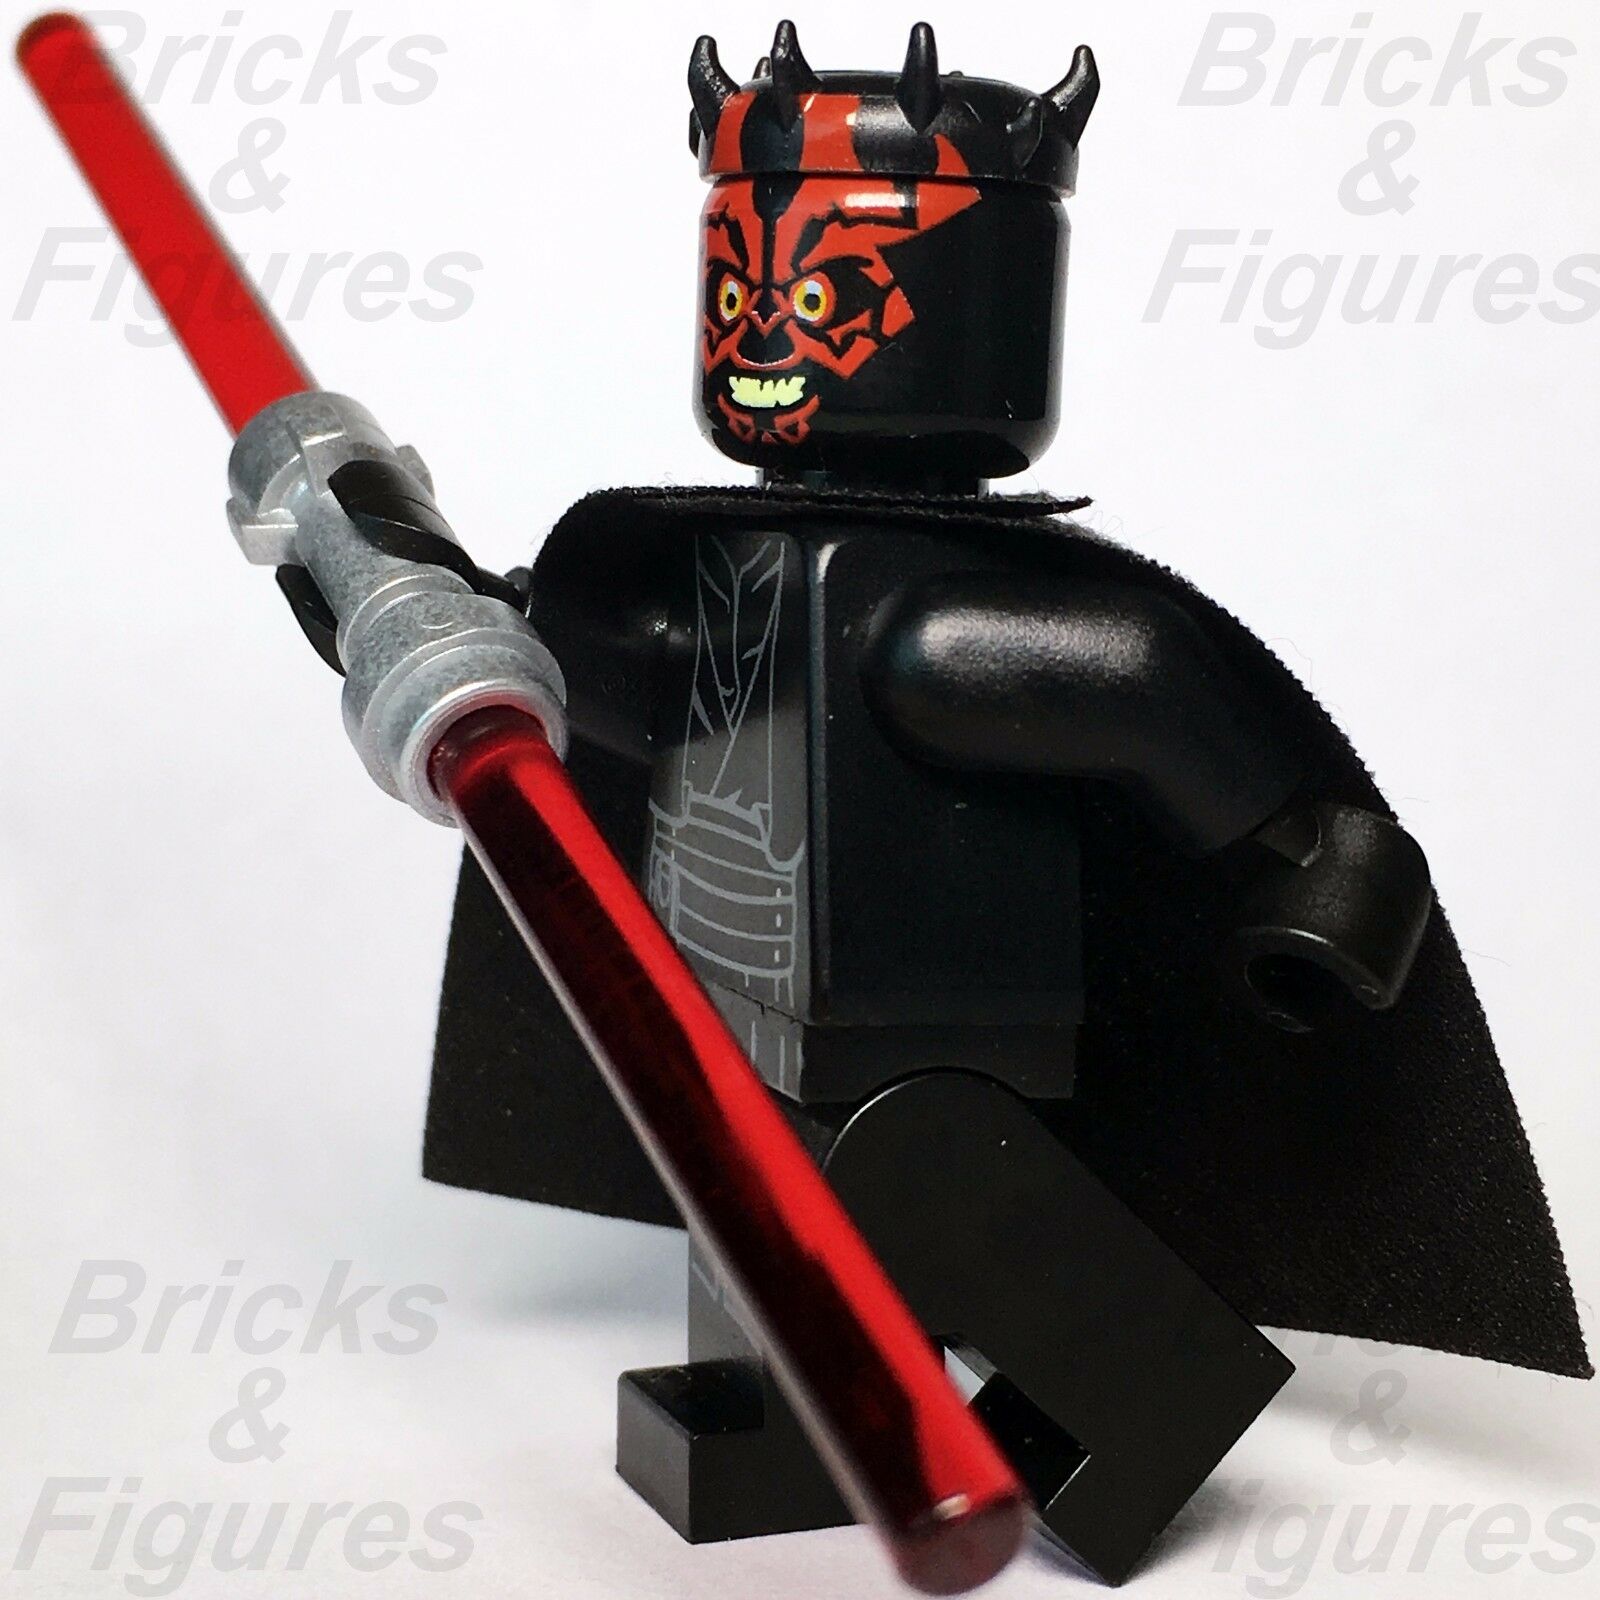 New Star Wars LEGO Darth Maul + Cape Zabrak Sith Apprentice Minifigure 75096 - Bricks & Figures